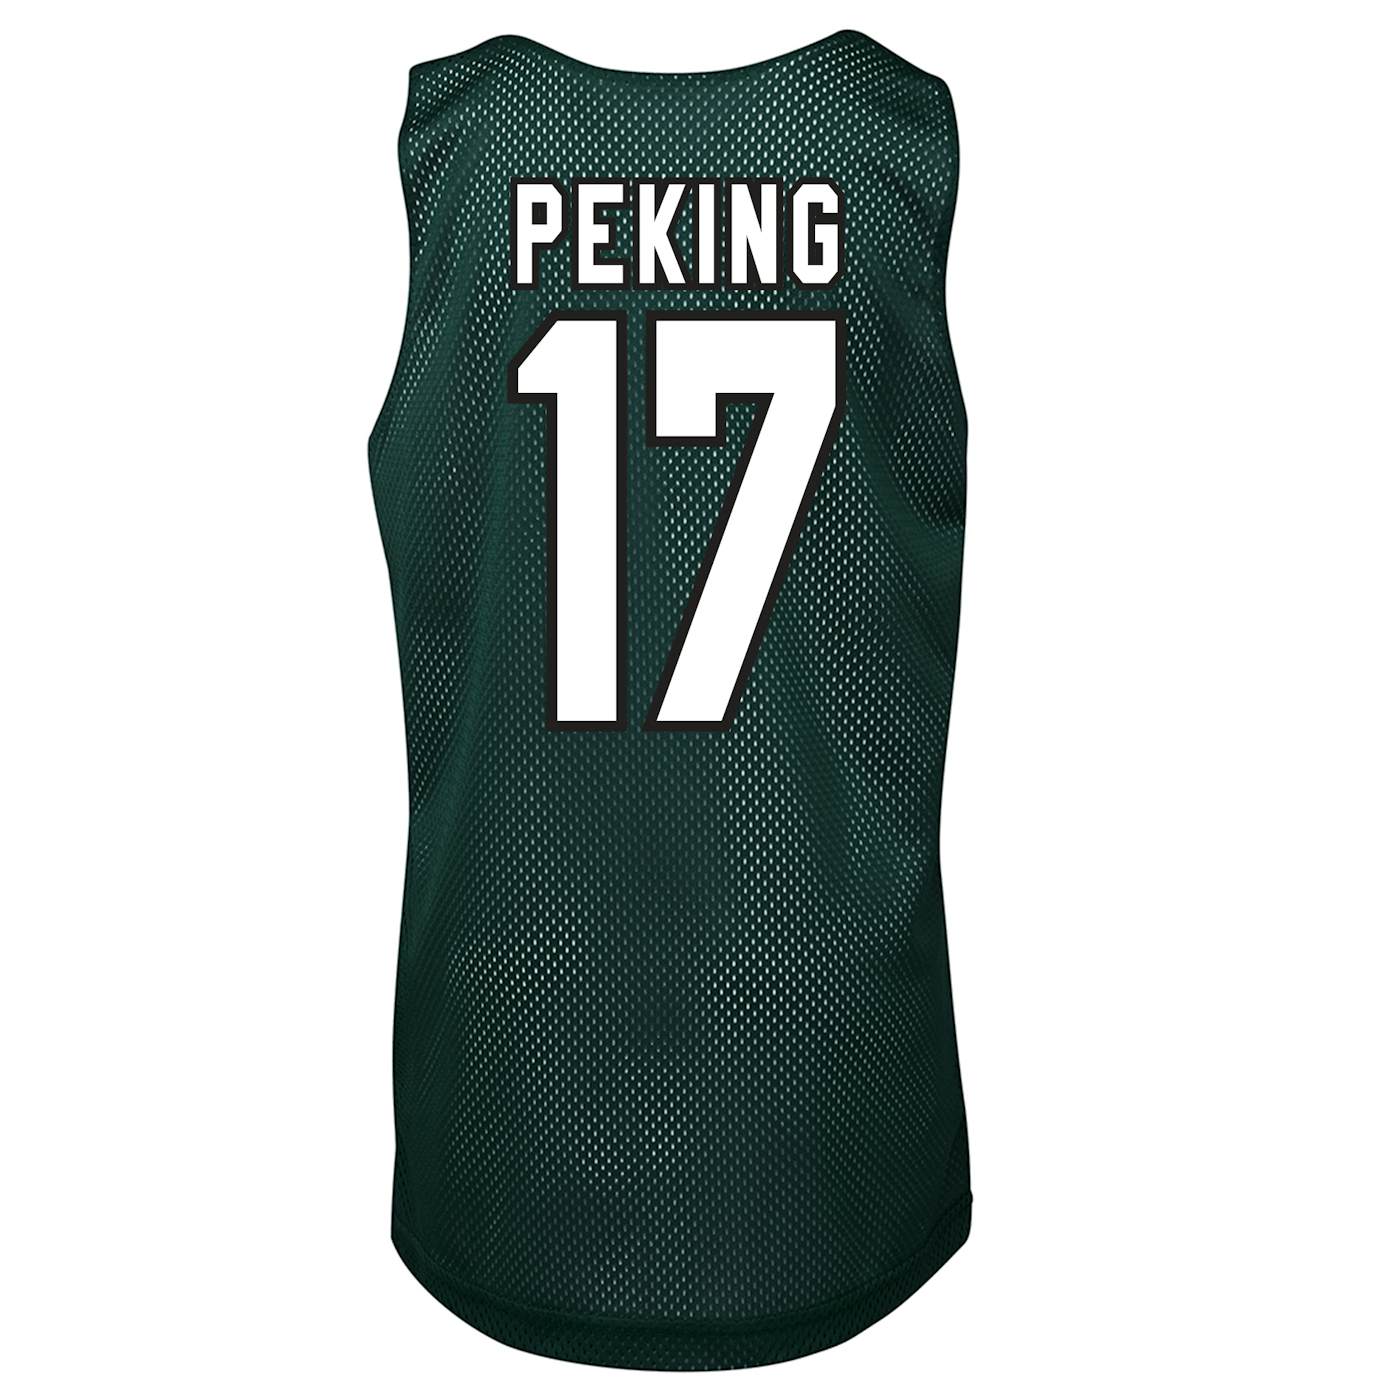 Peking Duk - Mighty Duk Jersey